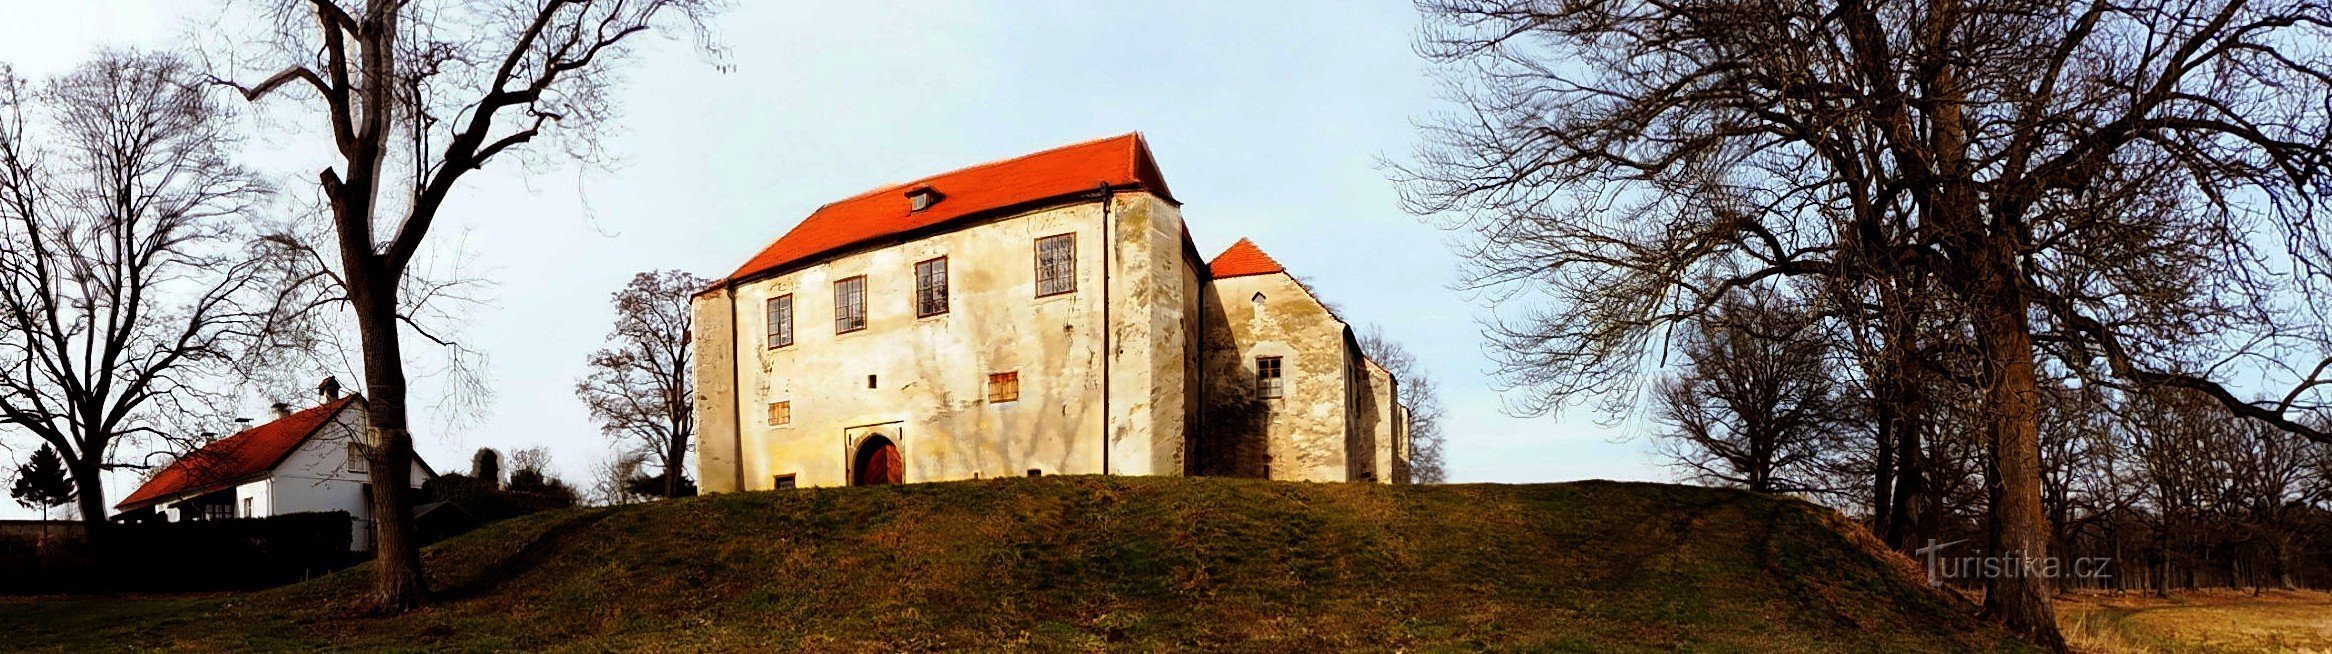 Fortezza gotica Zuknštejn